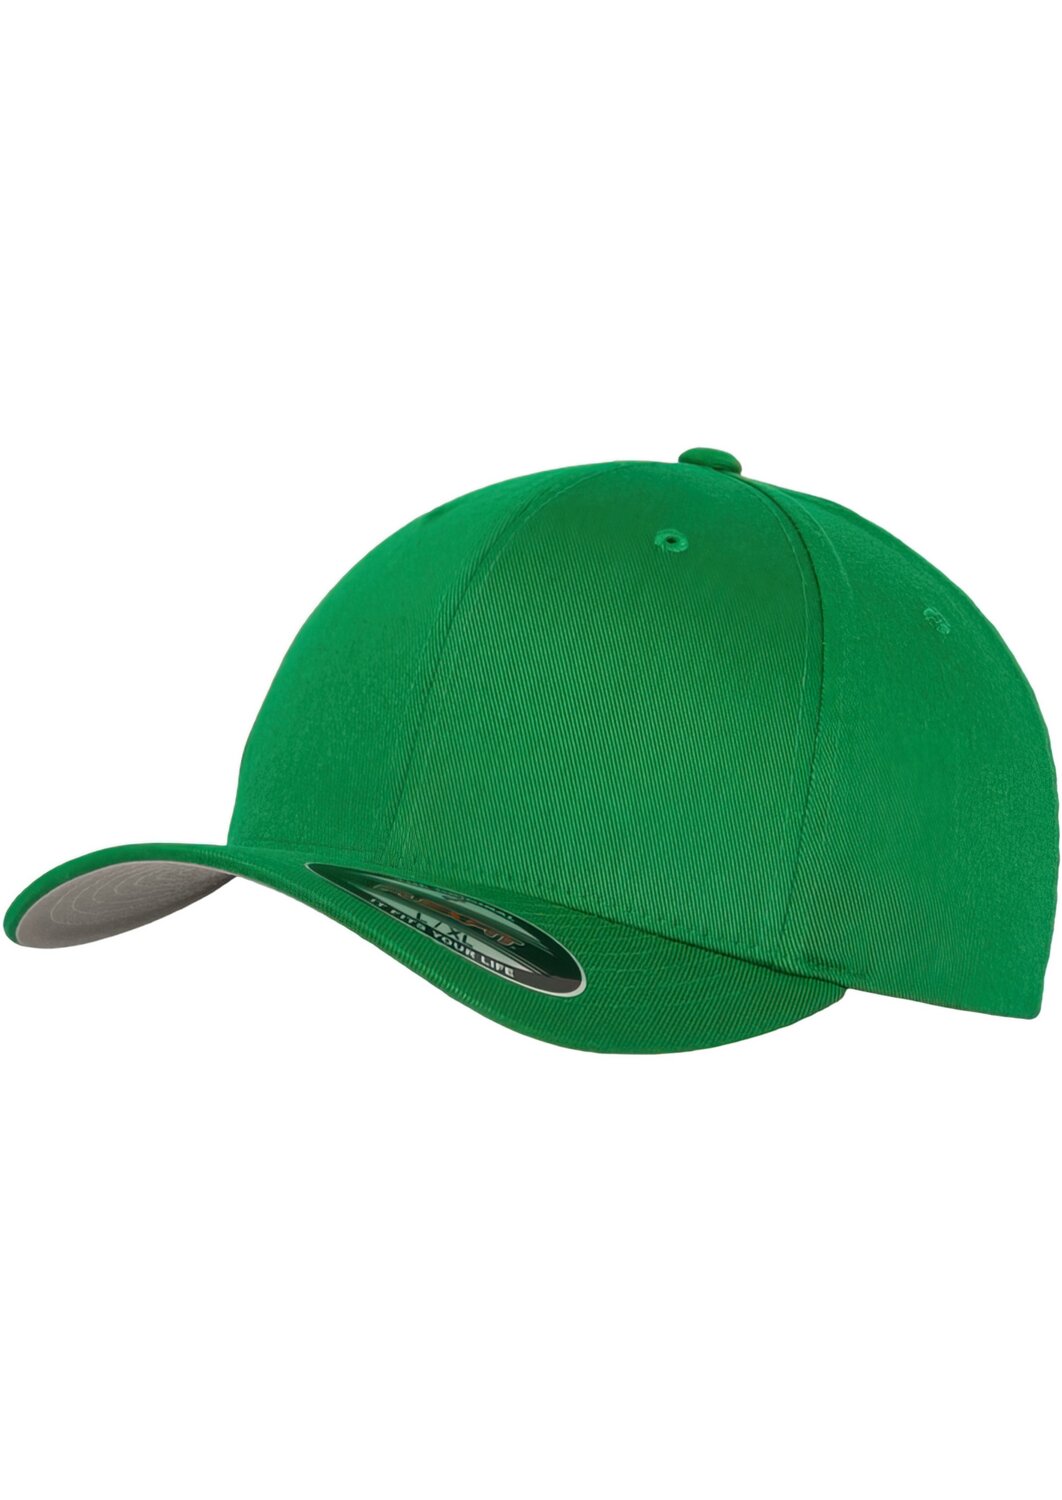 Combed Cap Wooly pepper green | Baseball MAXISCOOT Flexfit